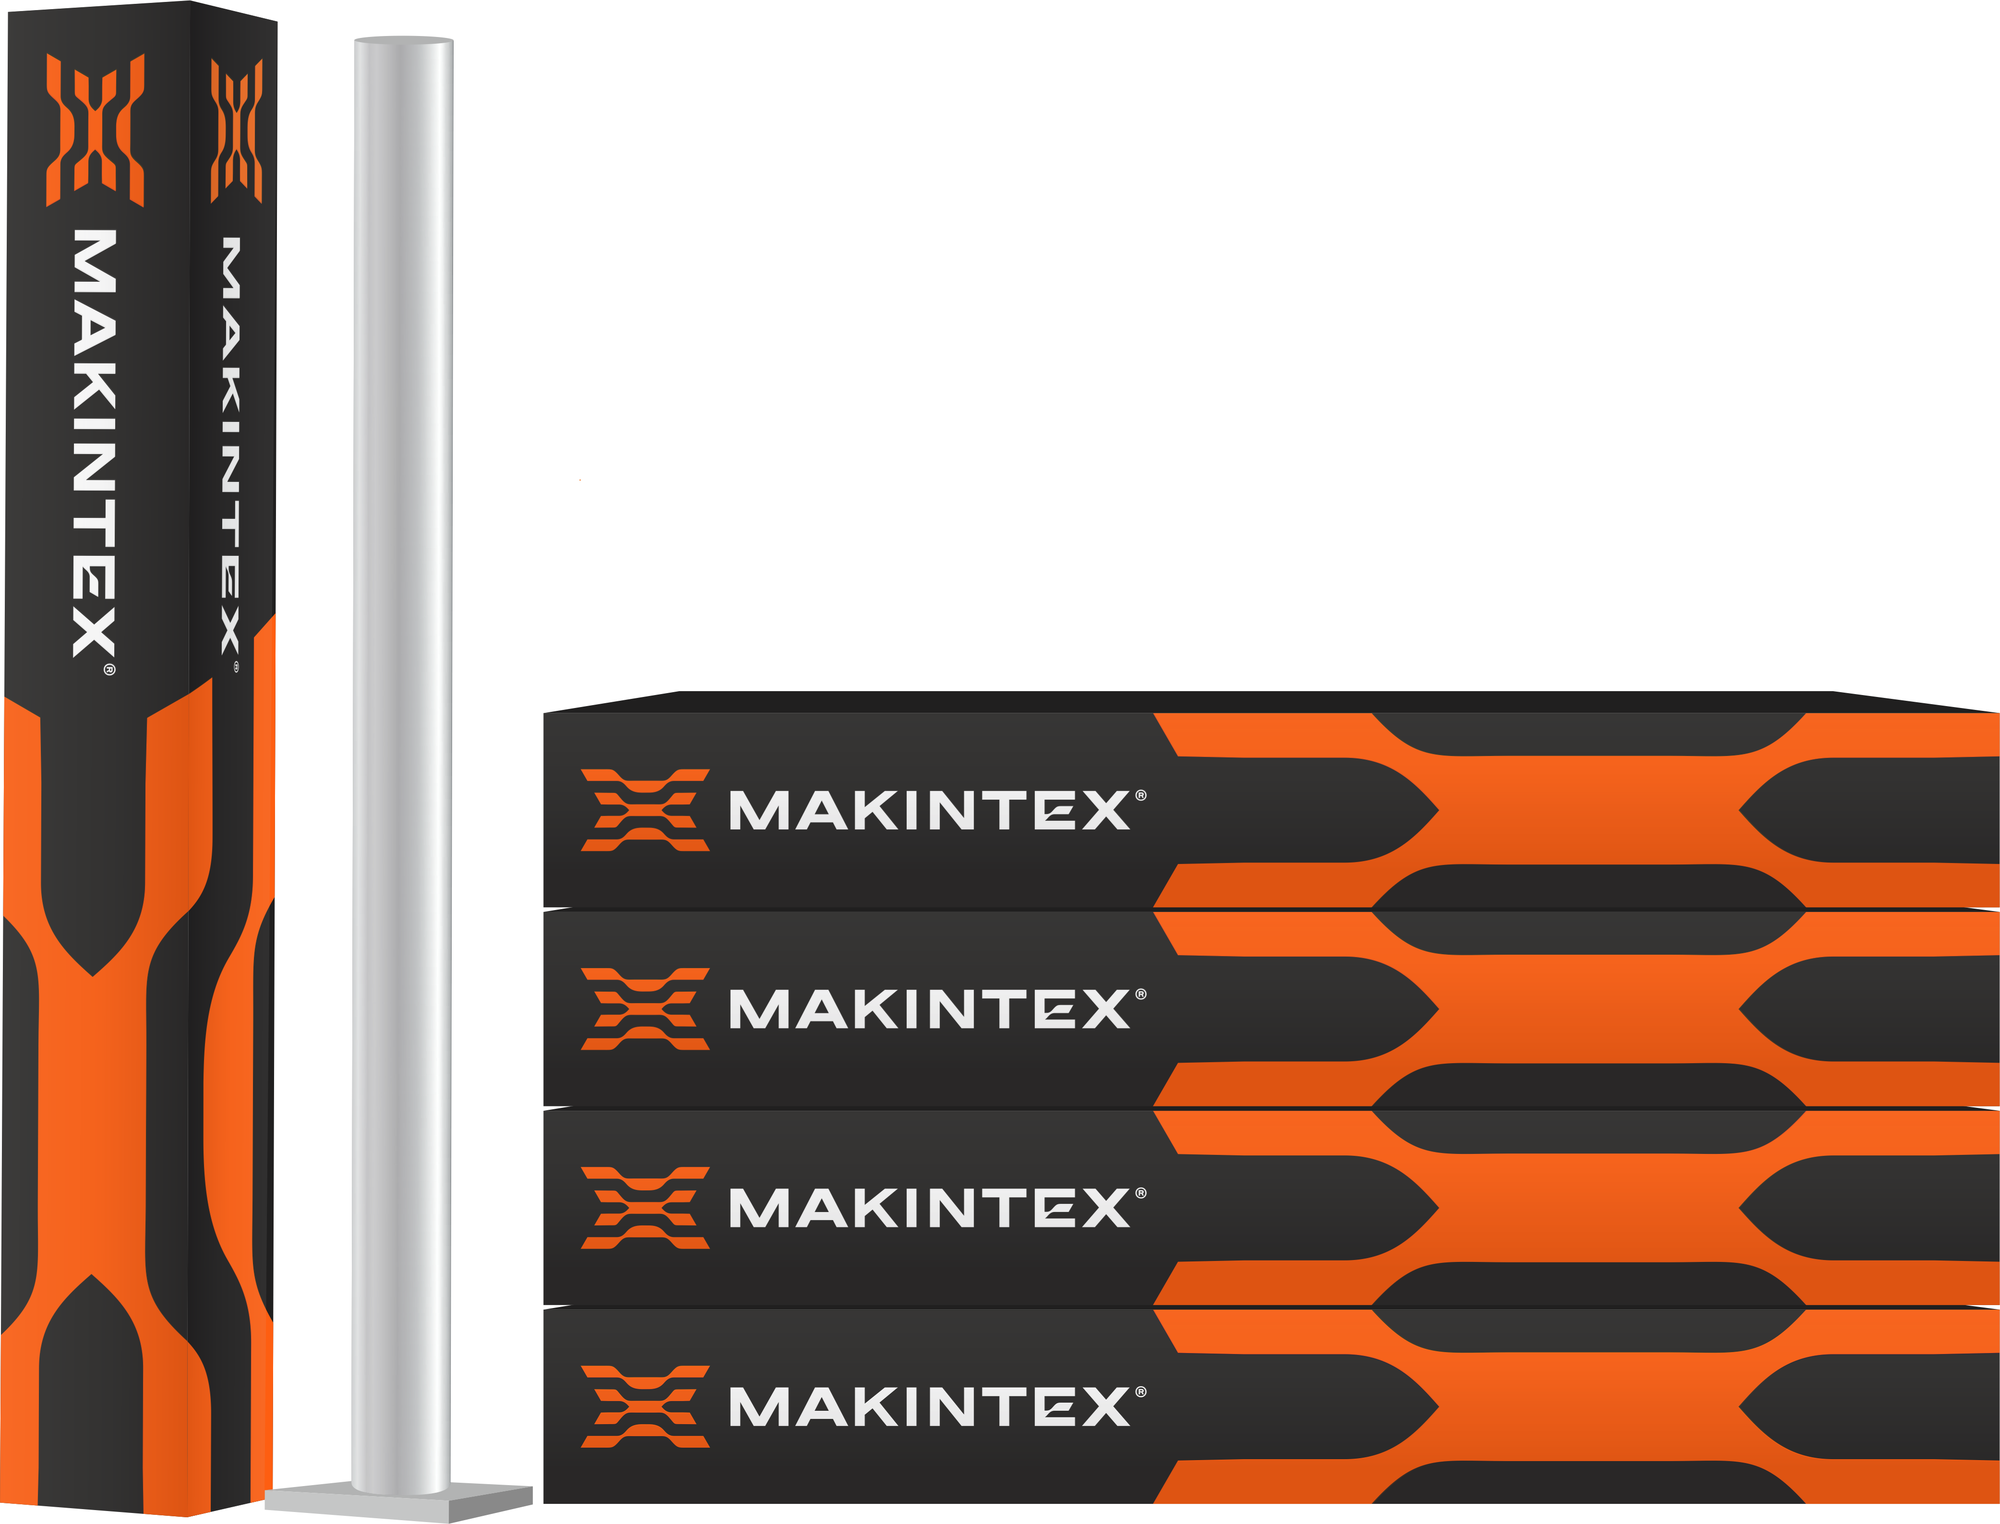 Плёнка защитная антигравийная MAKINTEX SUPERIOR CLEAR 1.52х20 см Прозрачная (полиуретановая) для защиты кузова от царапин и сколов.